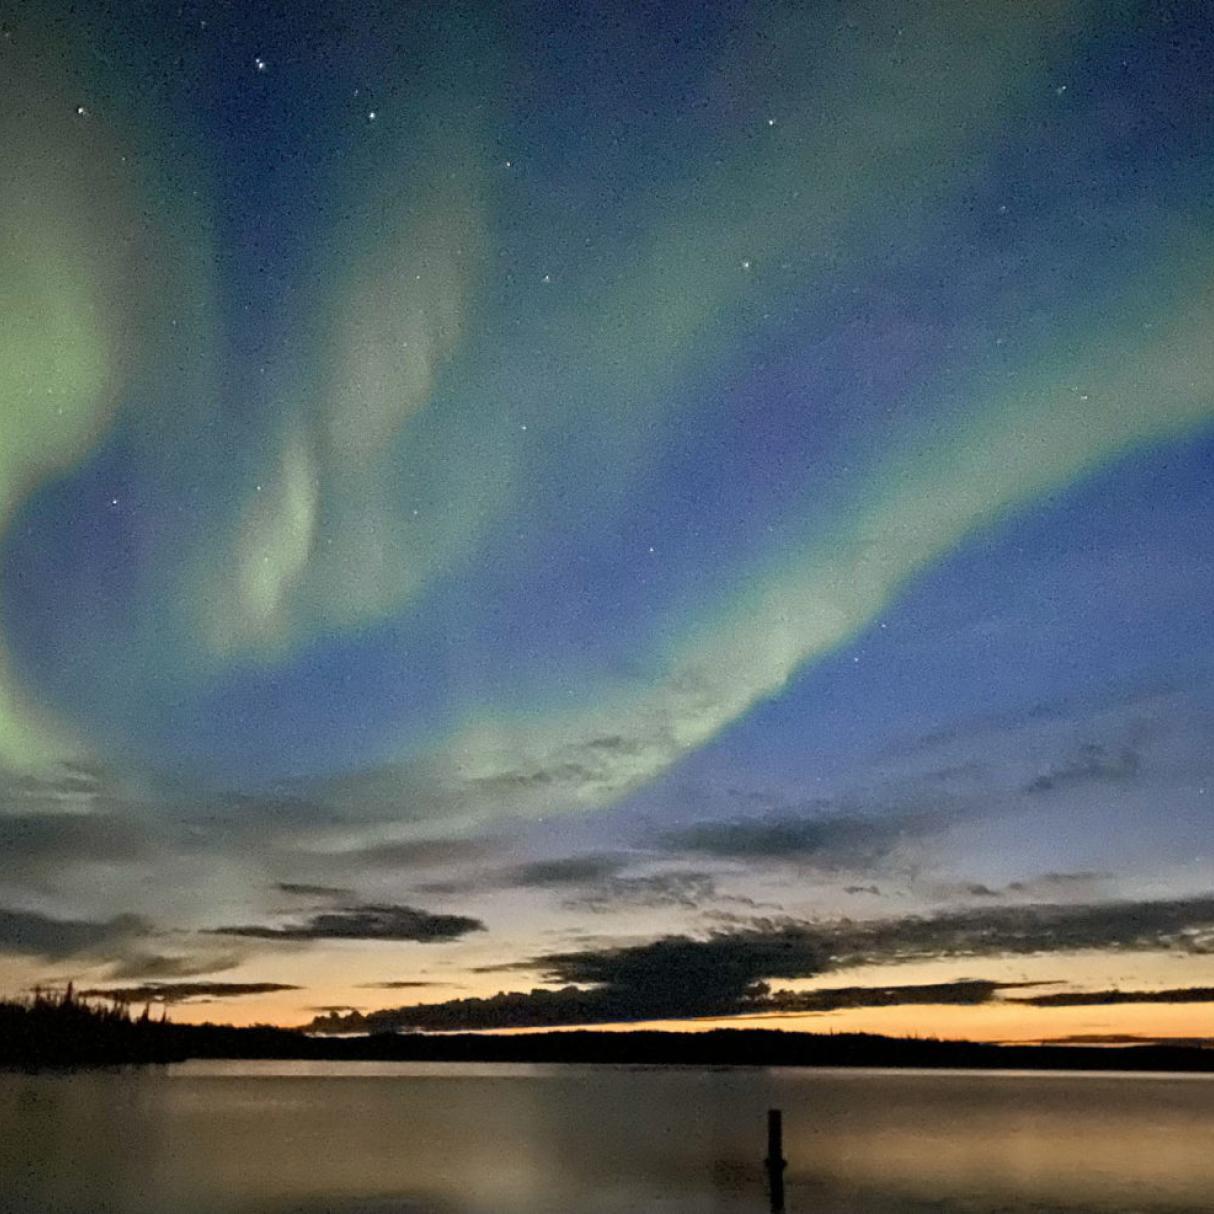 The Northern lights over a lake